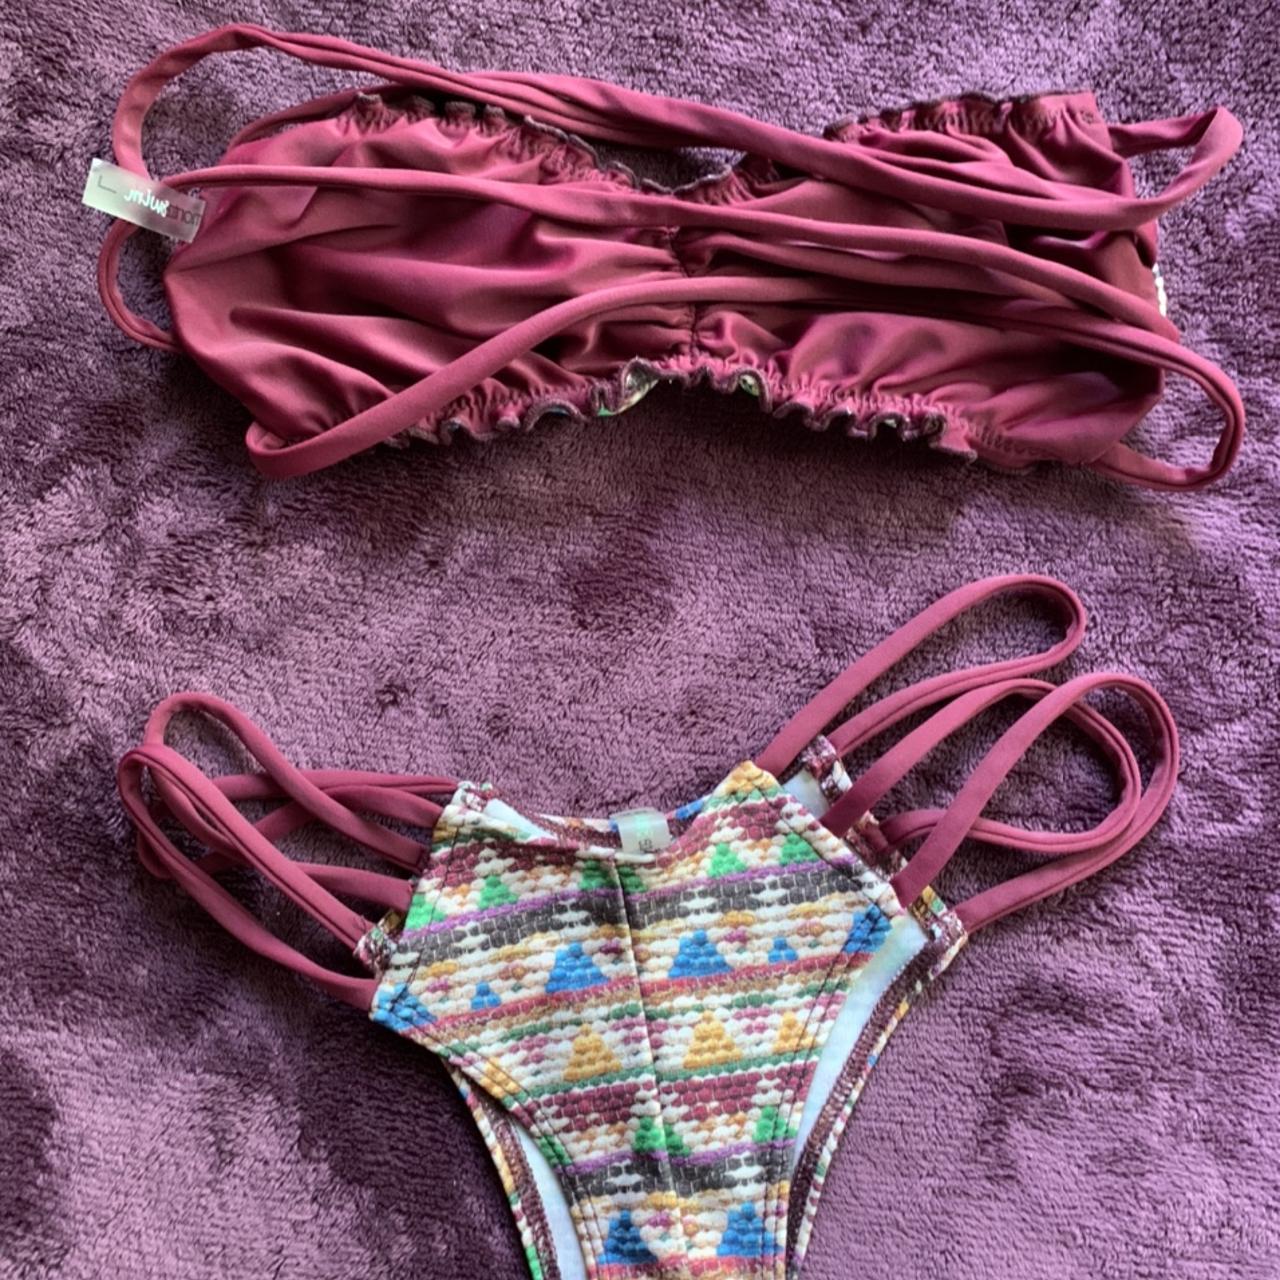 montce swim Goldie Allie One-Piece Swimsuit Bikini - Depop